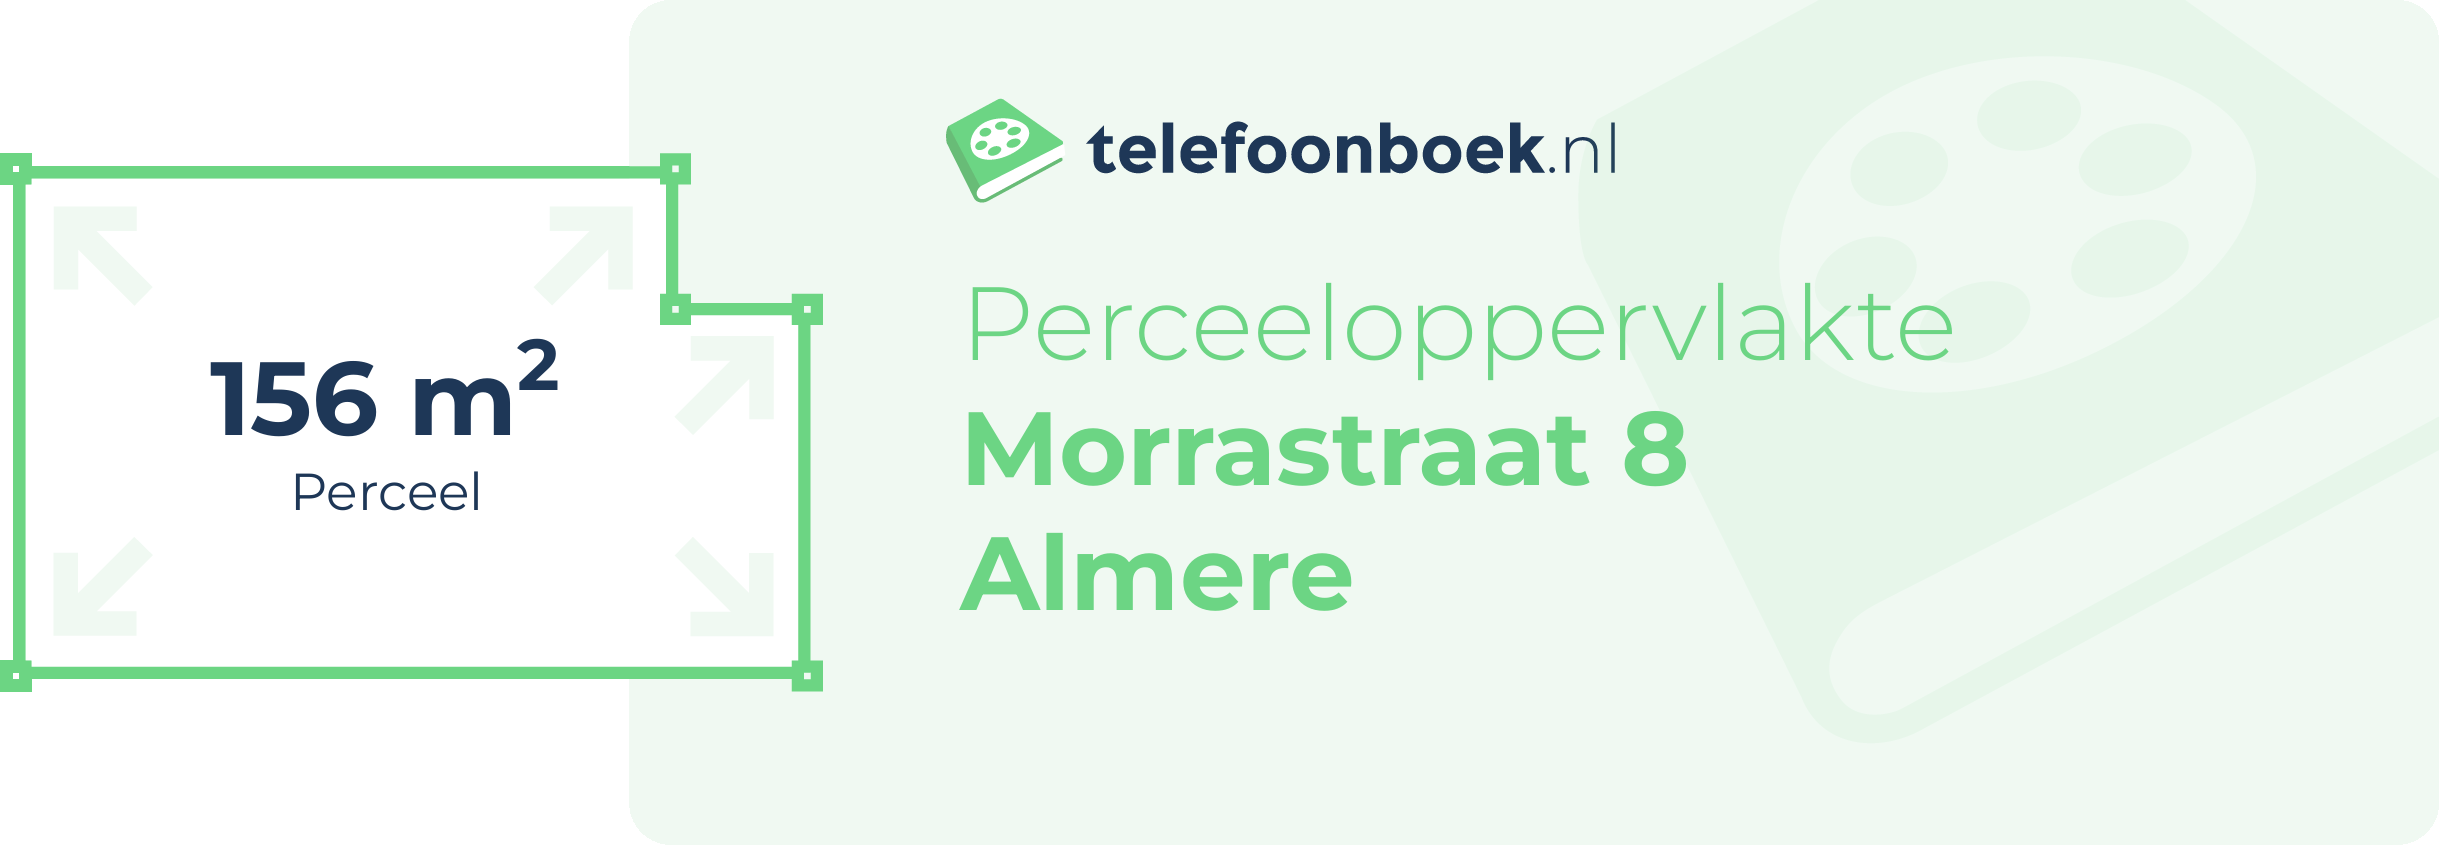 Perceeloppervlakte Morrastraat 8 Almere